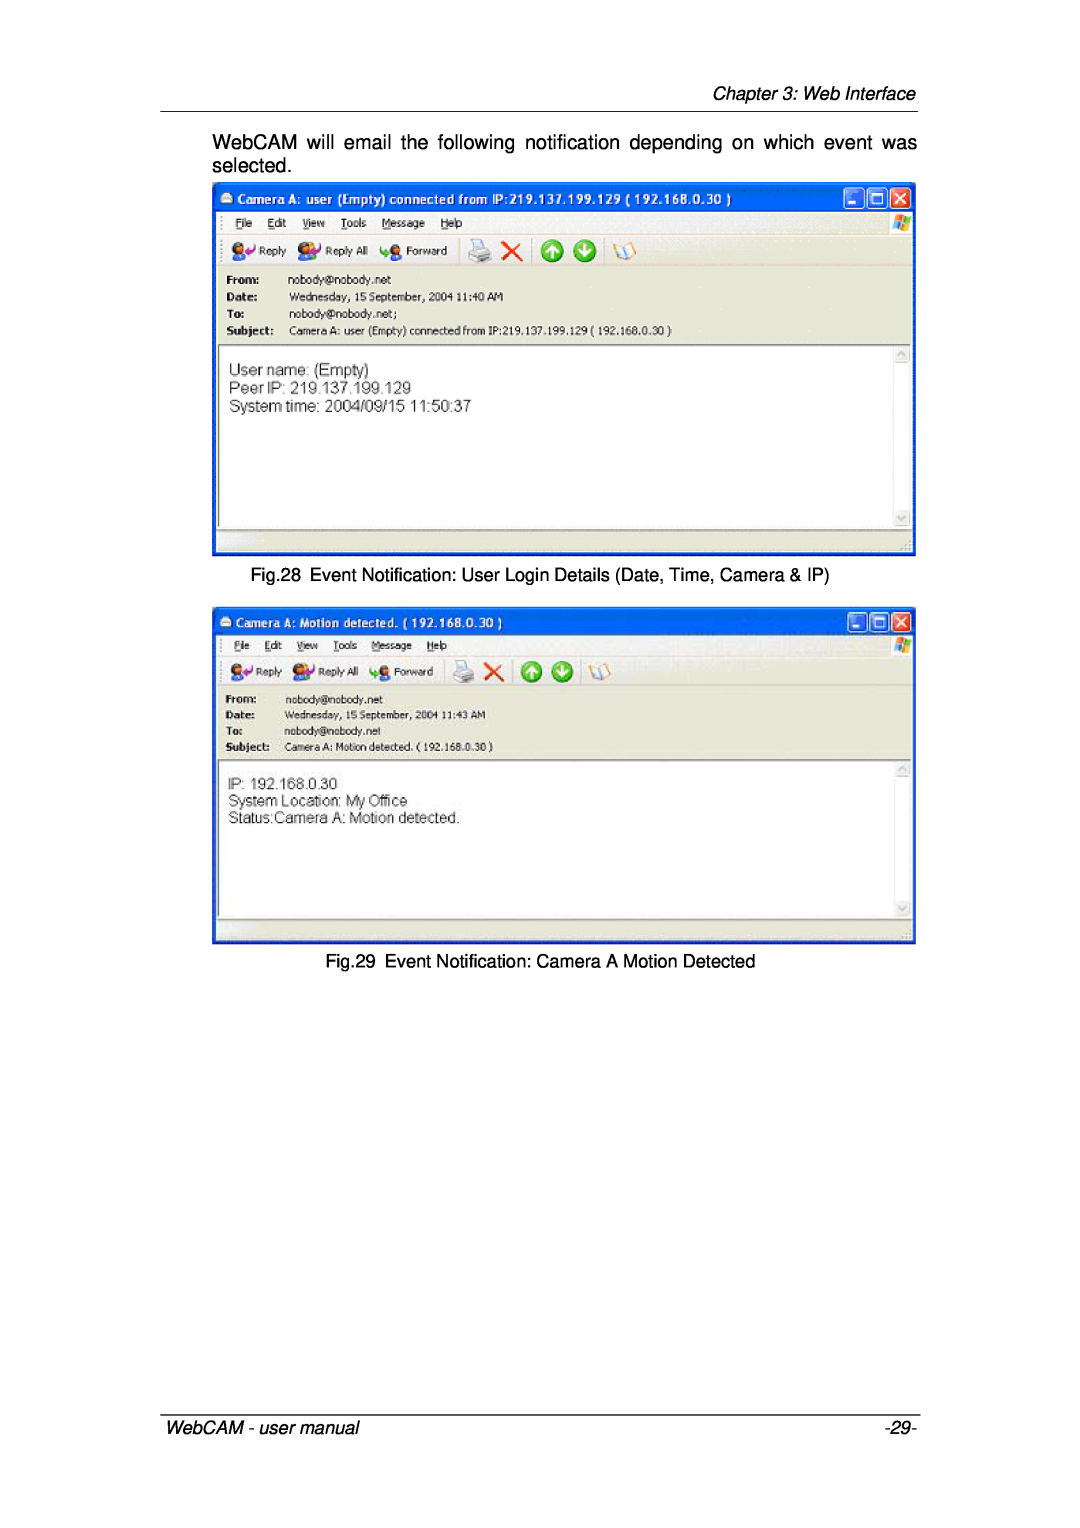 3Com iCV-03a, iCV-01a Web Interface, Event Notification User Login Details Date, Time, Camera & IP, WebCAM - user manual 